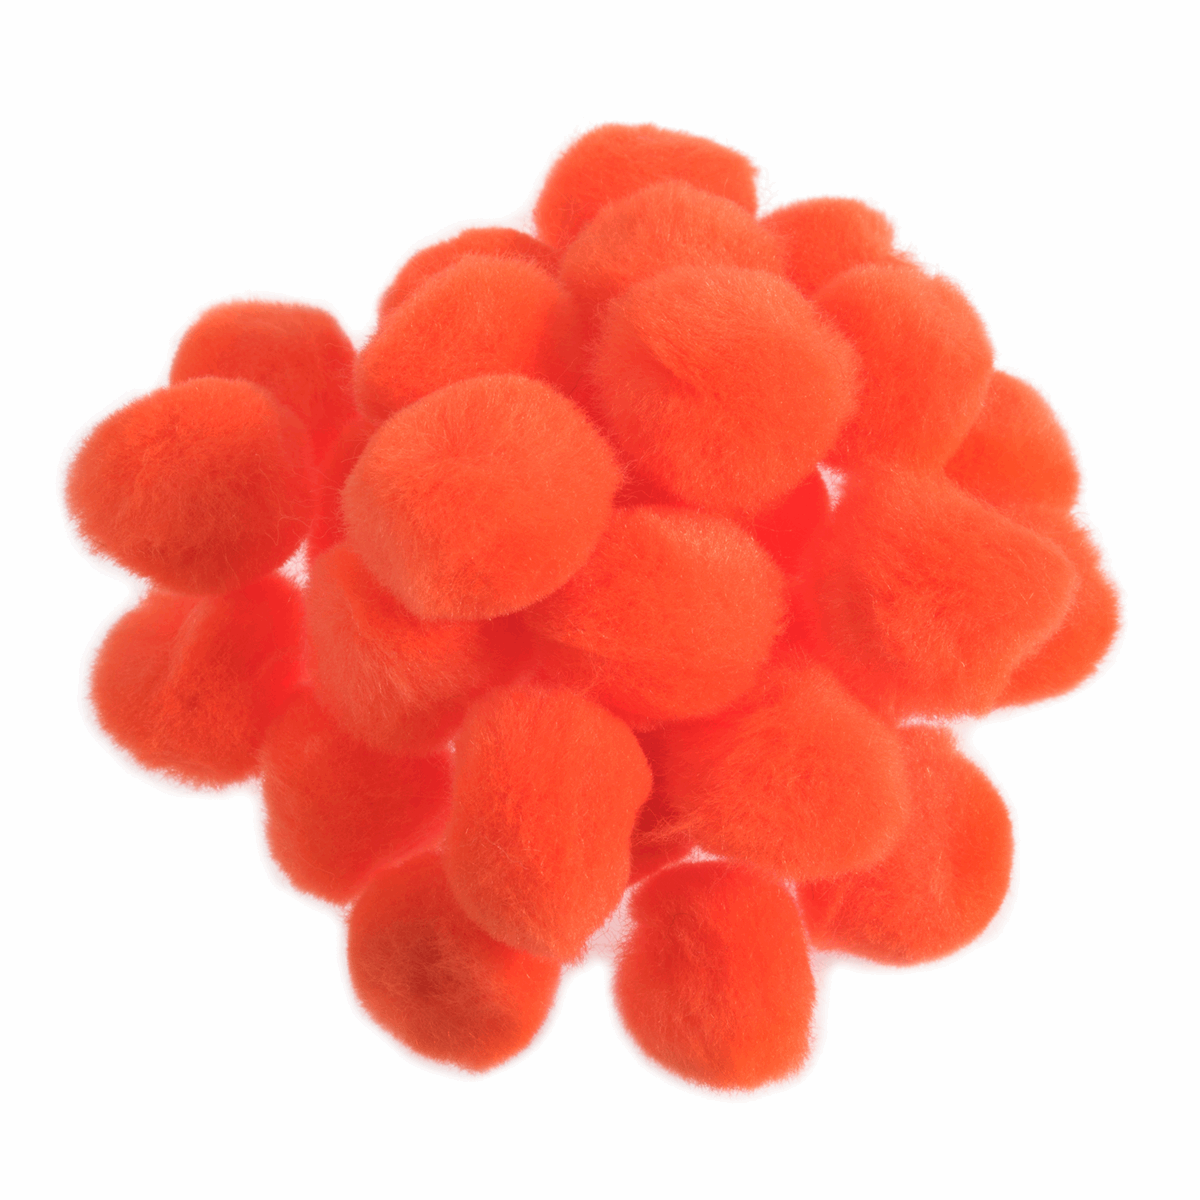 Trimits Orange Pom Poms - 25mm (Pack of 100)